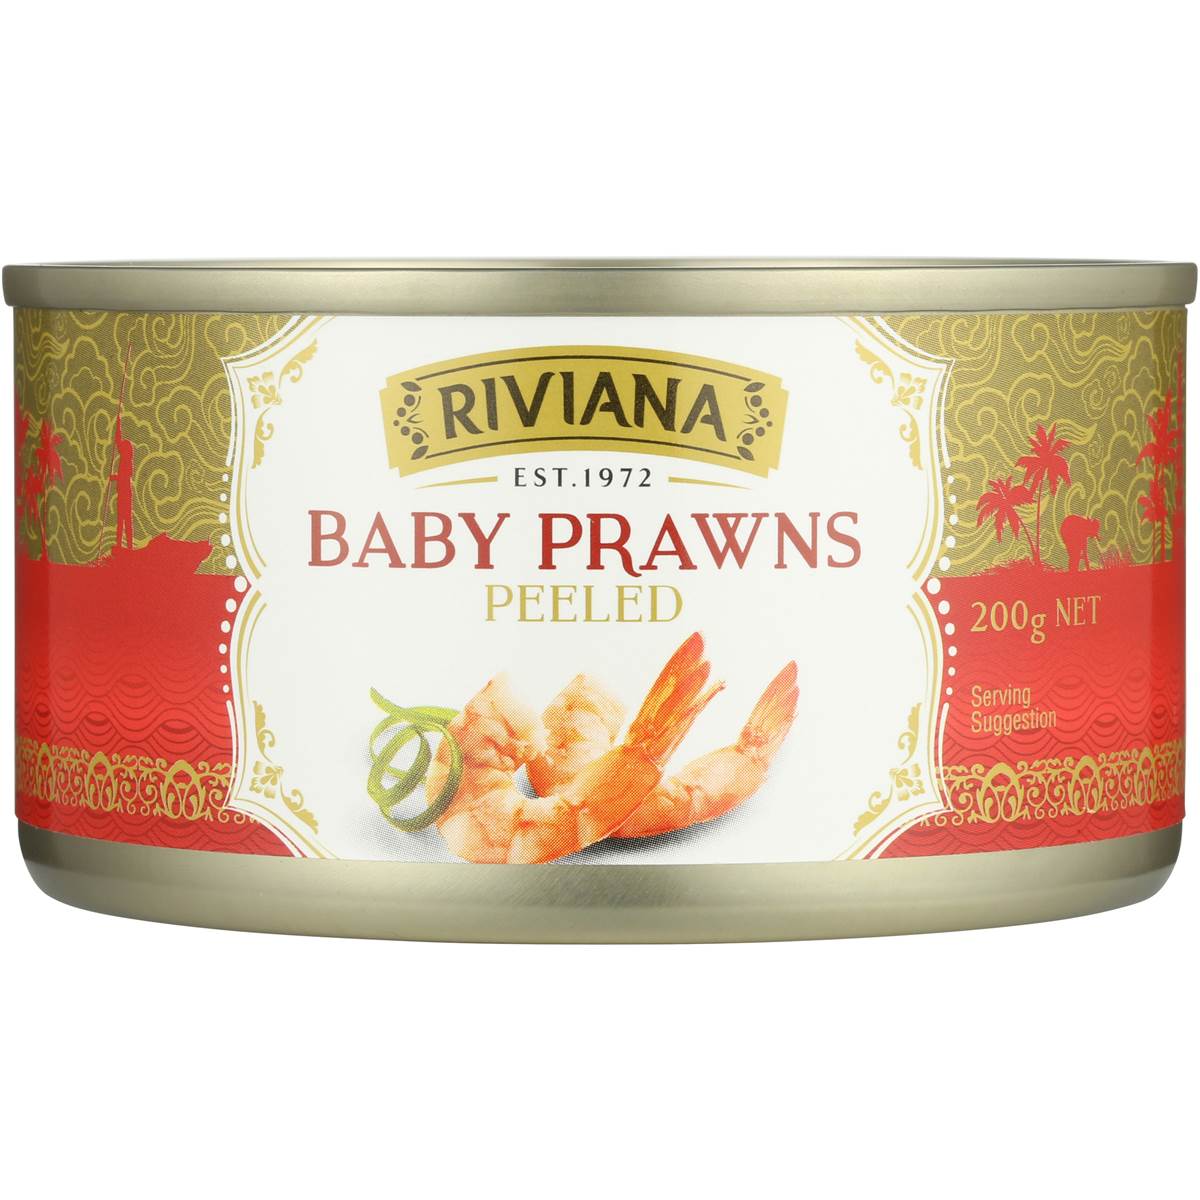 Riviana Baby Prawns Peeled 200g